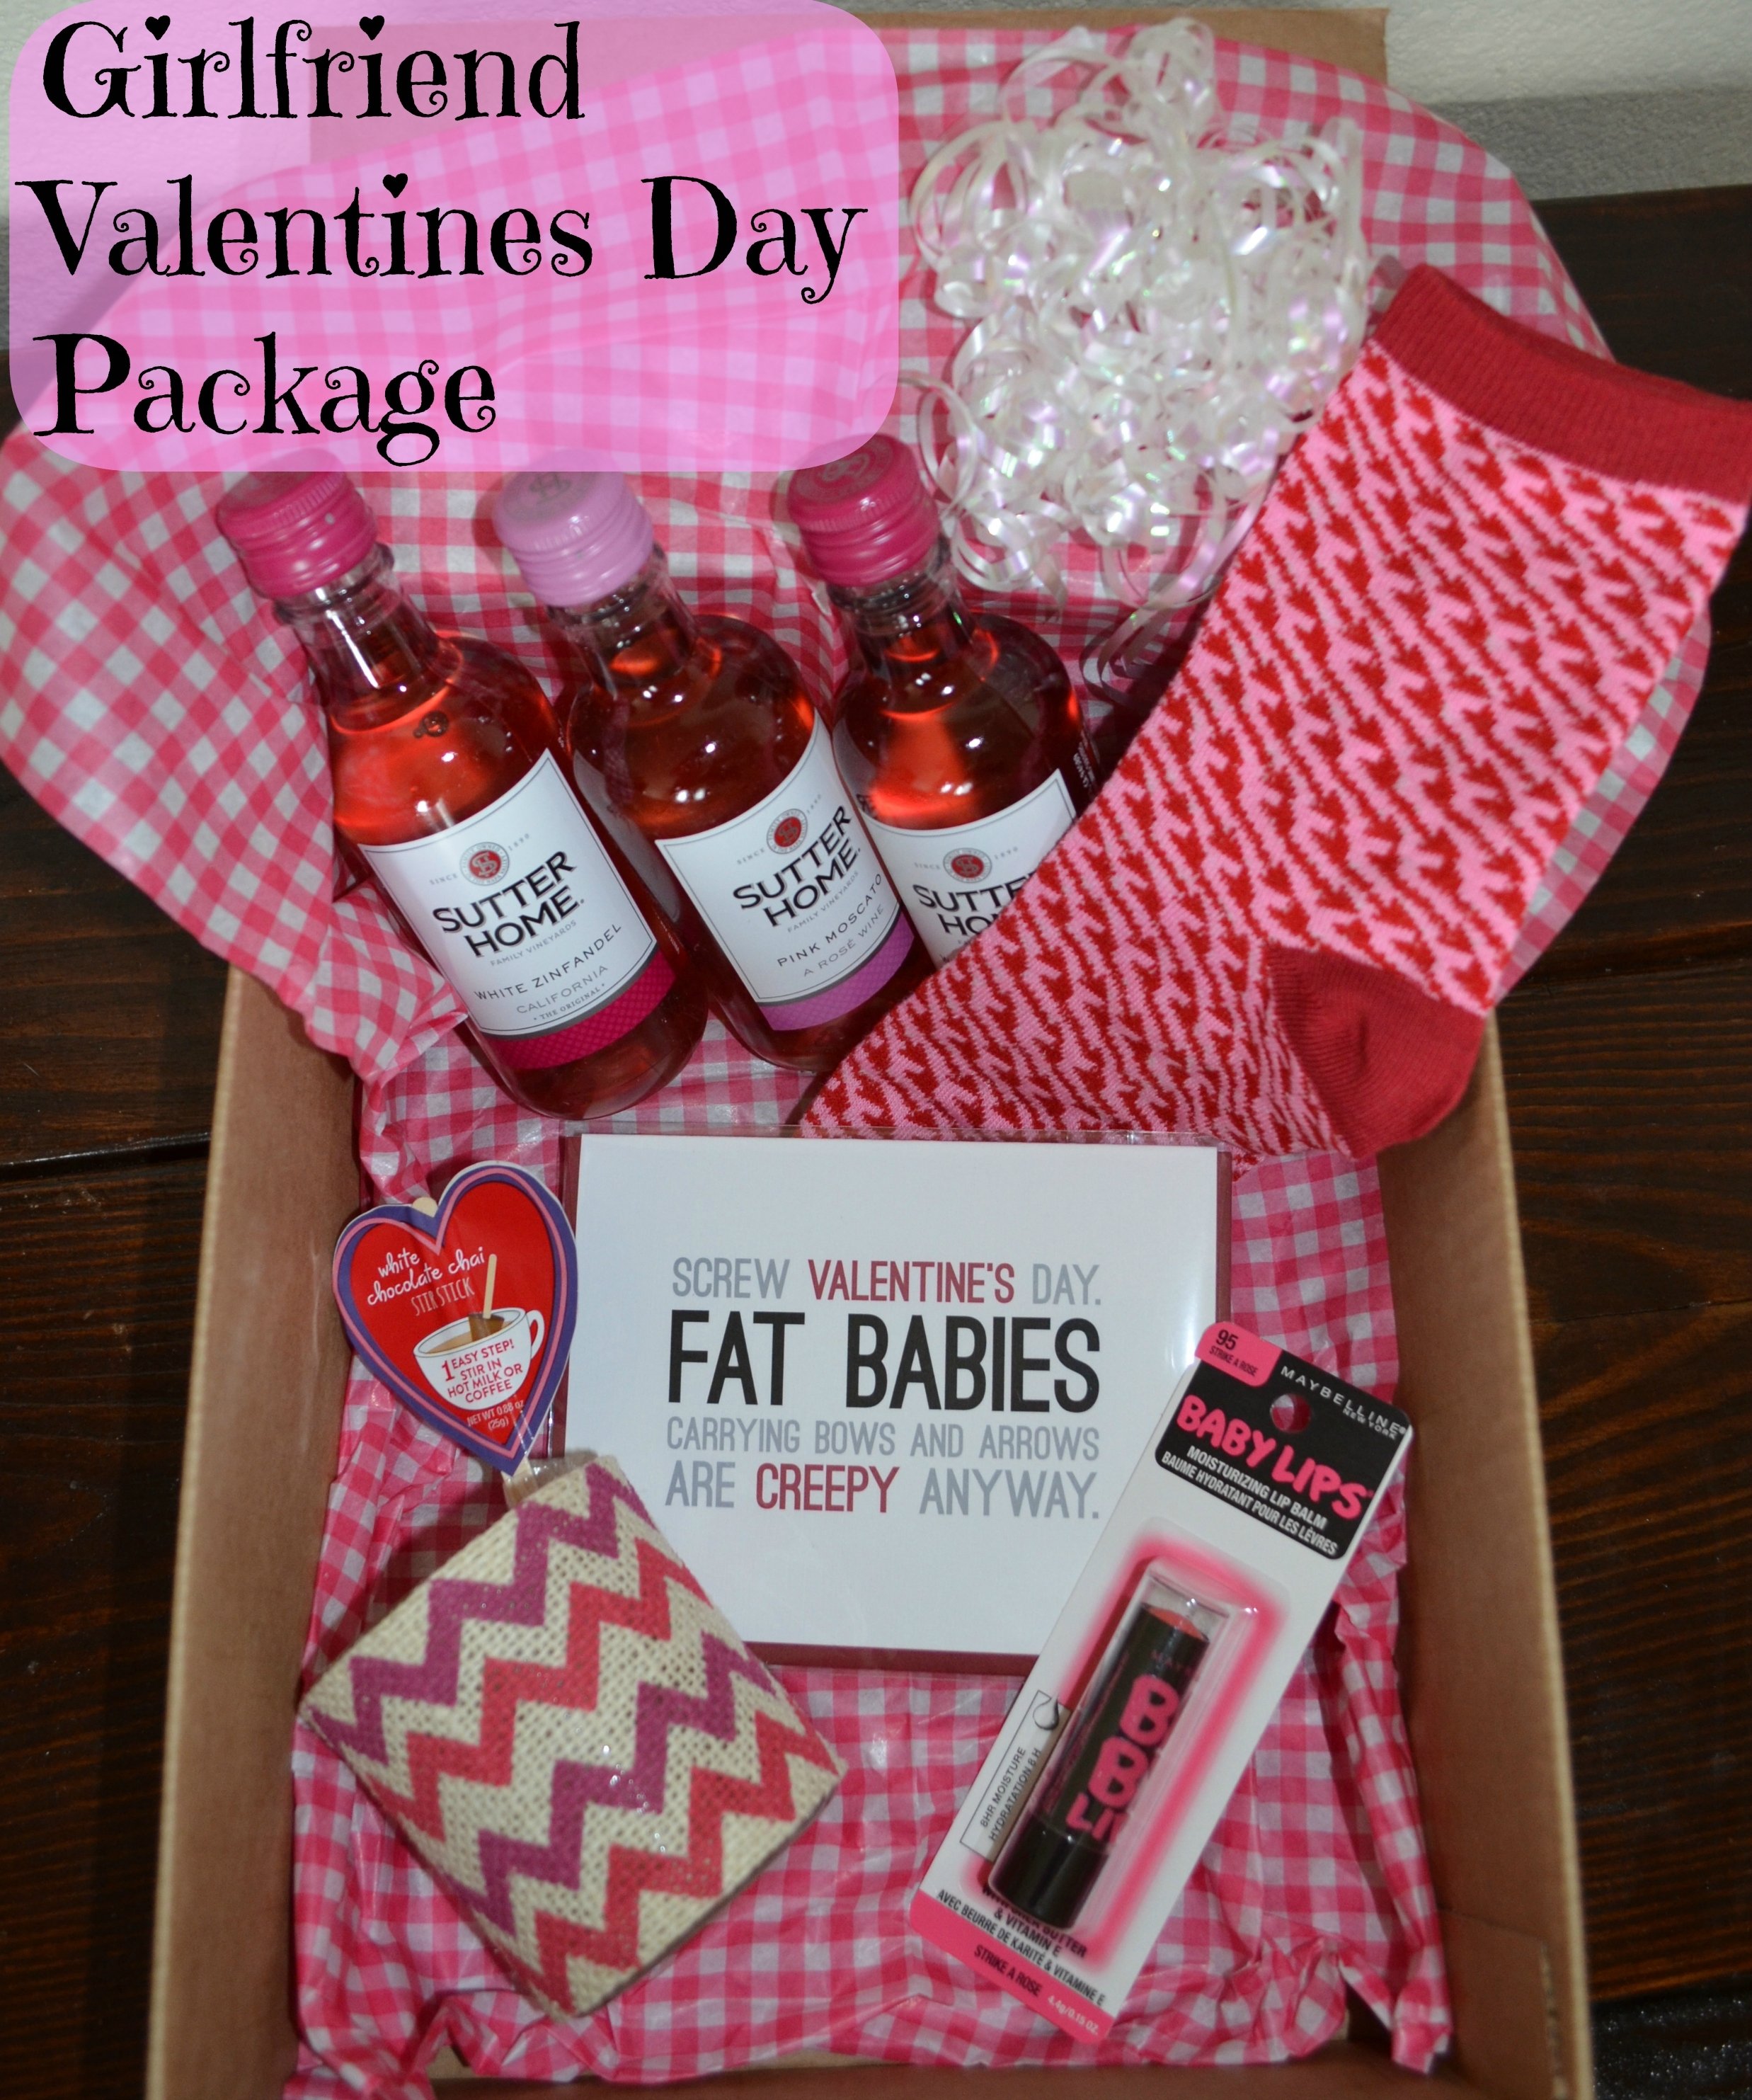 10 Fabulous Cute Ideas For Boyfriend Valentines Day valentines day ideas him creative valentine gifts crafthubs dma 24 2022